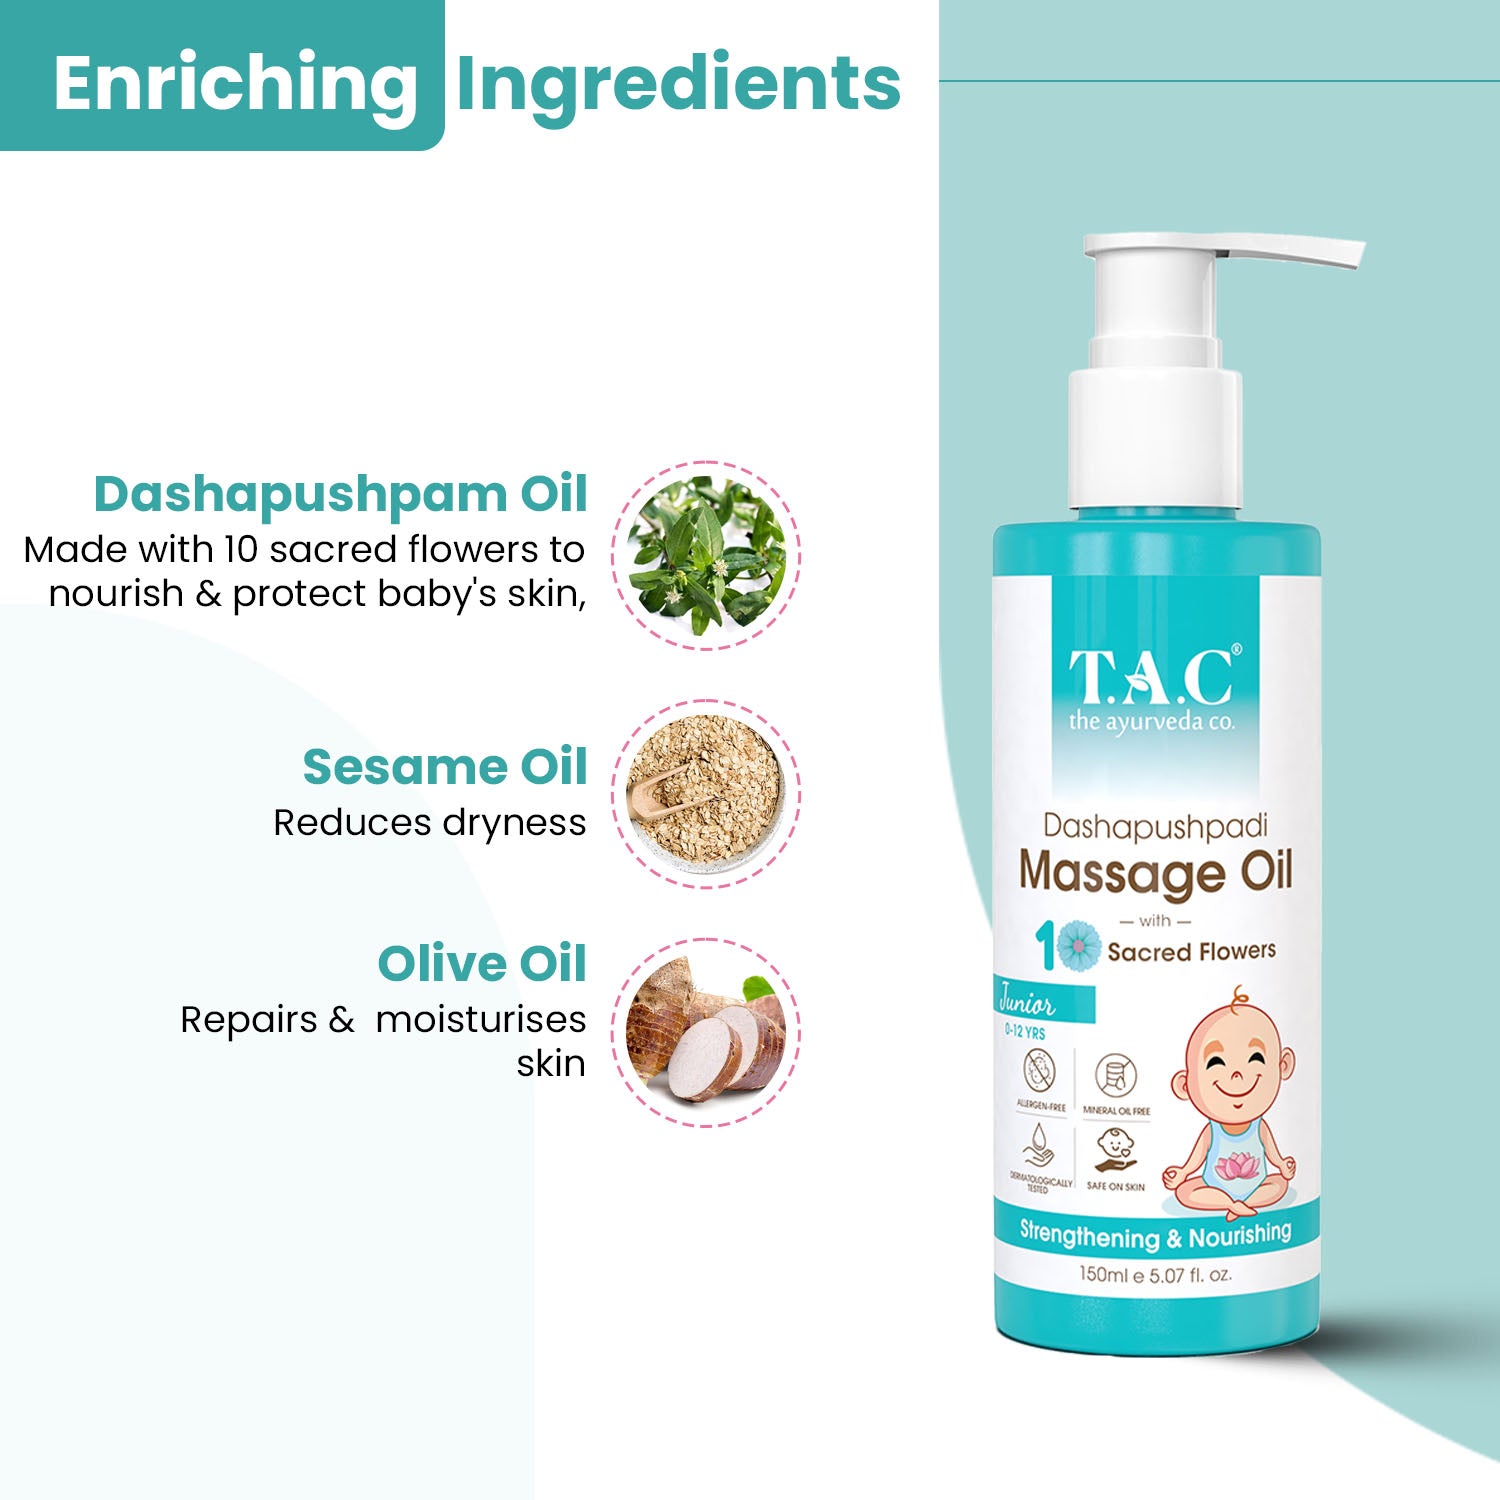 Dashapushpadi Baby Massage Oil